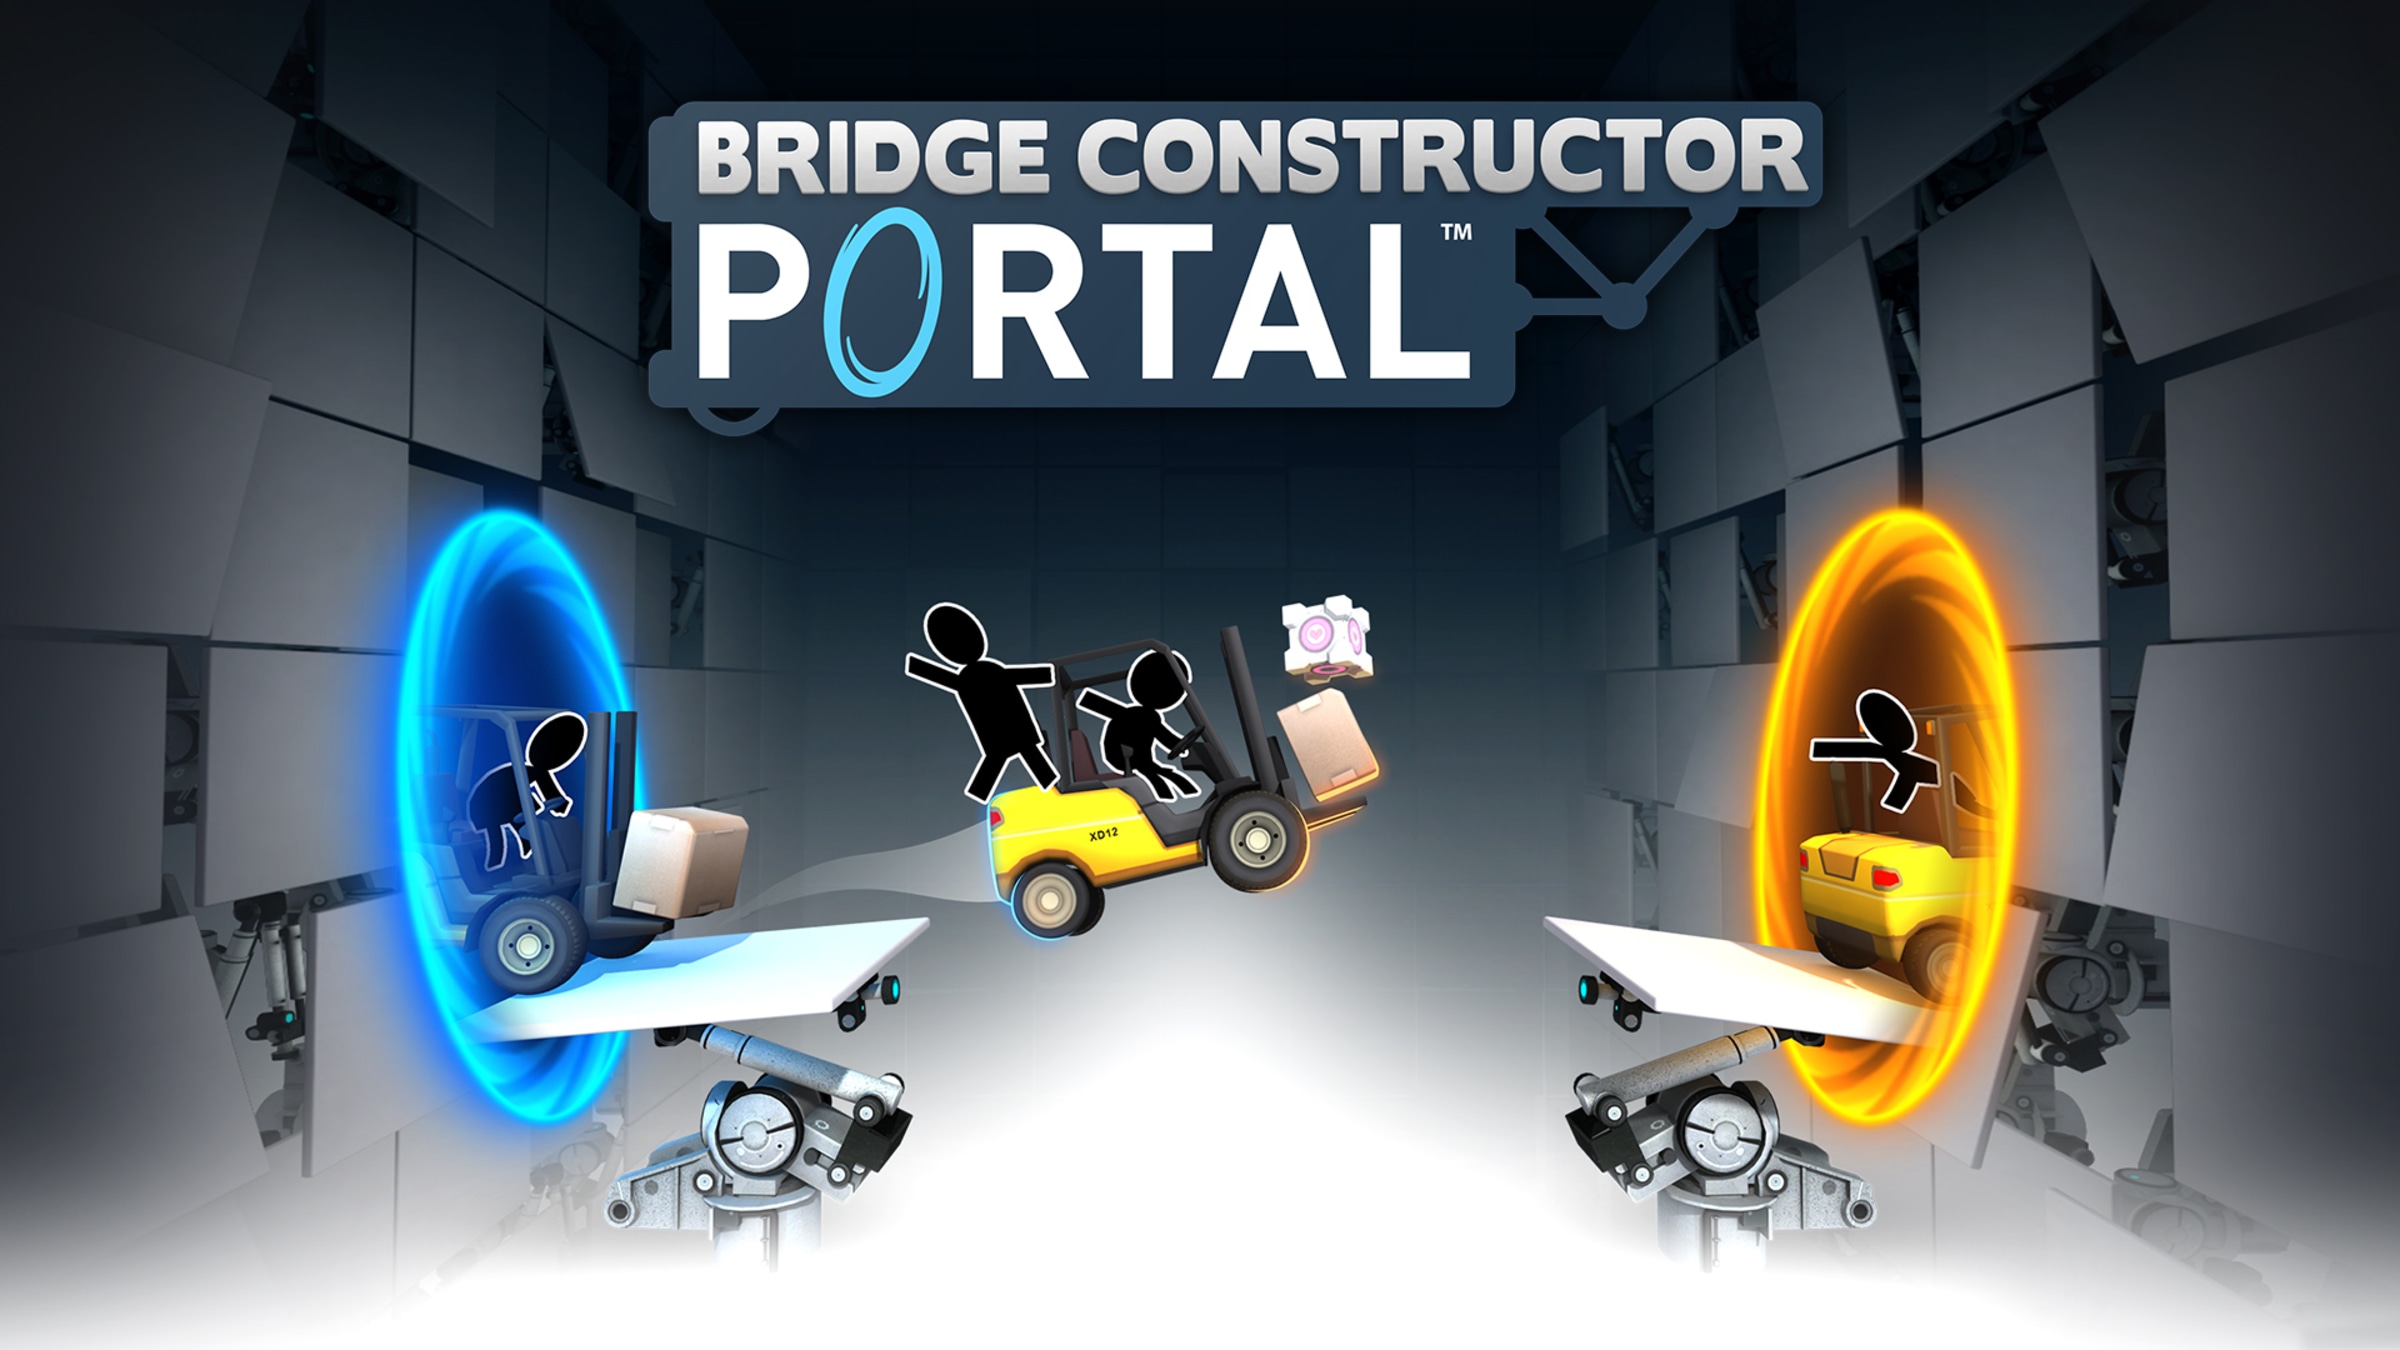 Bridge Constructor Portal for Nintendo Switch - Nintendo Official Site